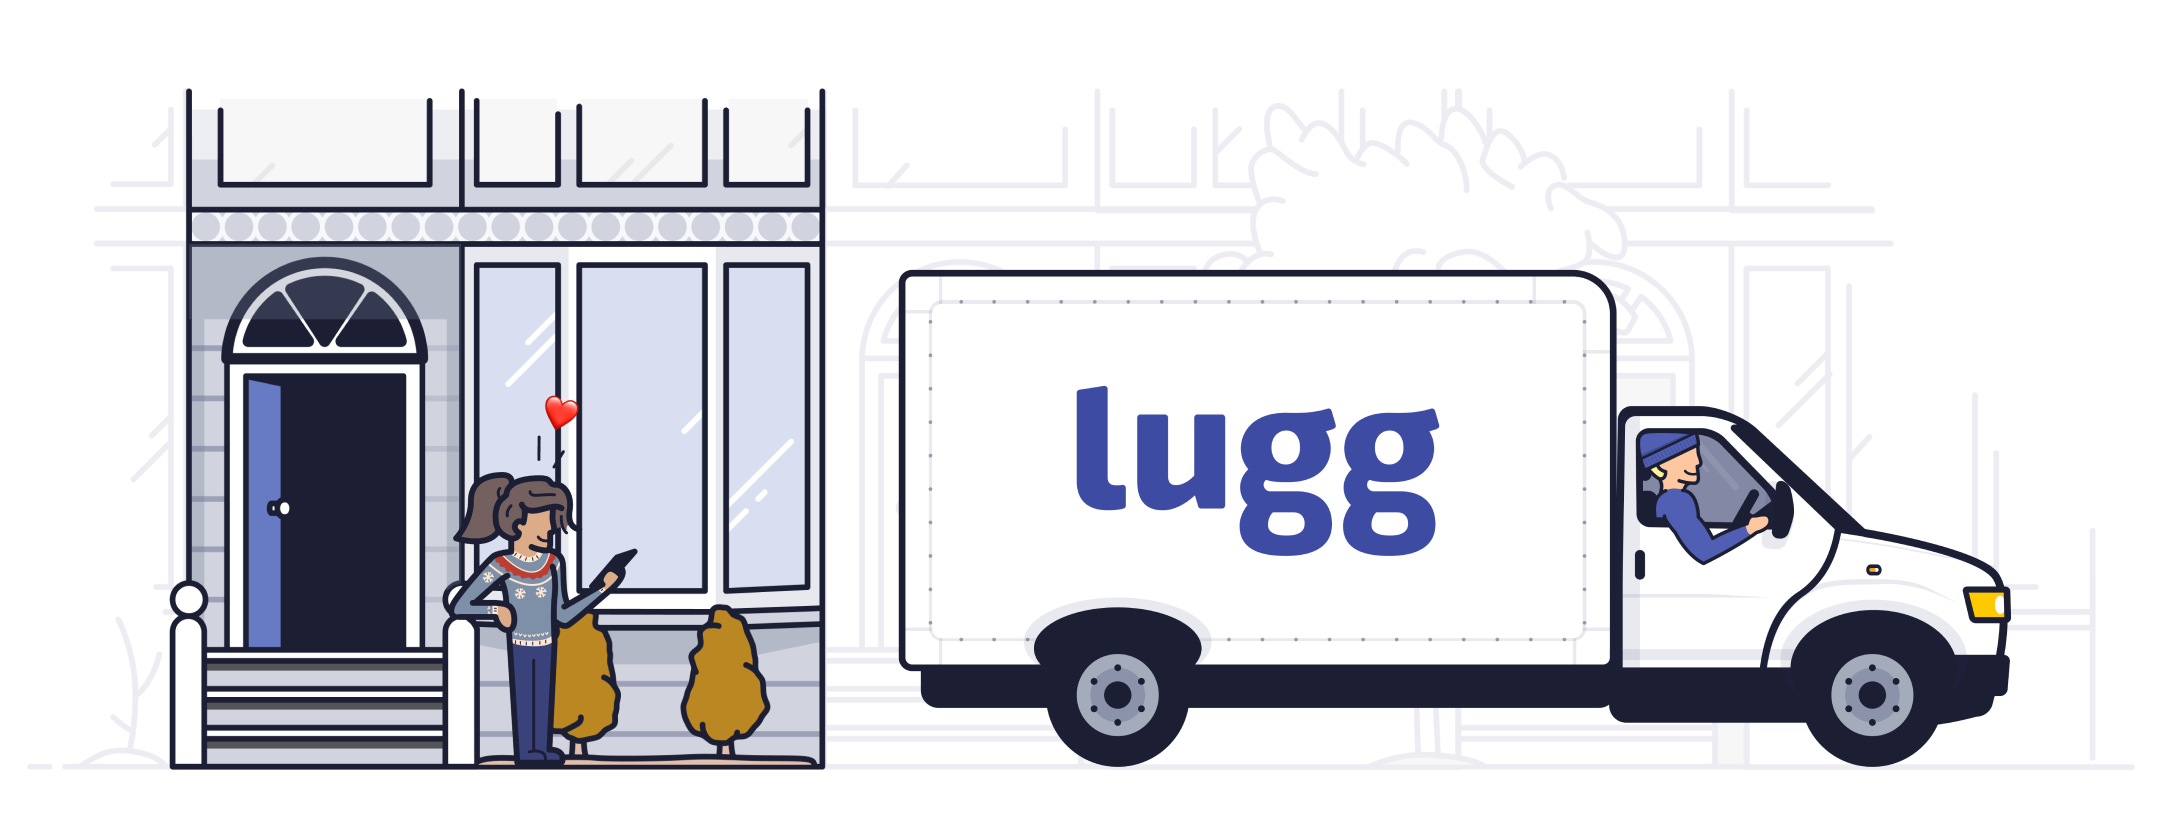 Meet Lugg Box